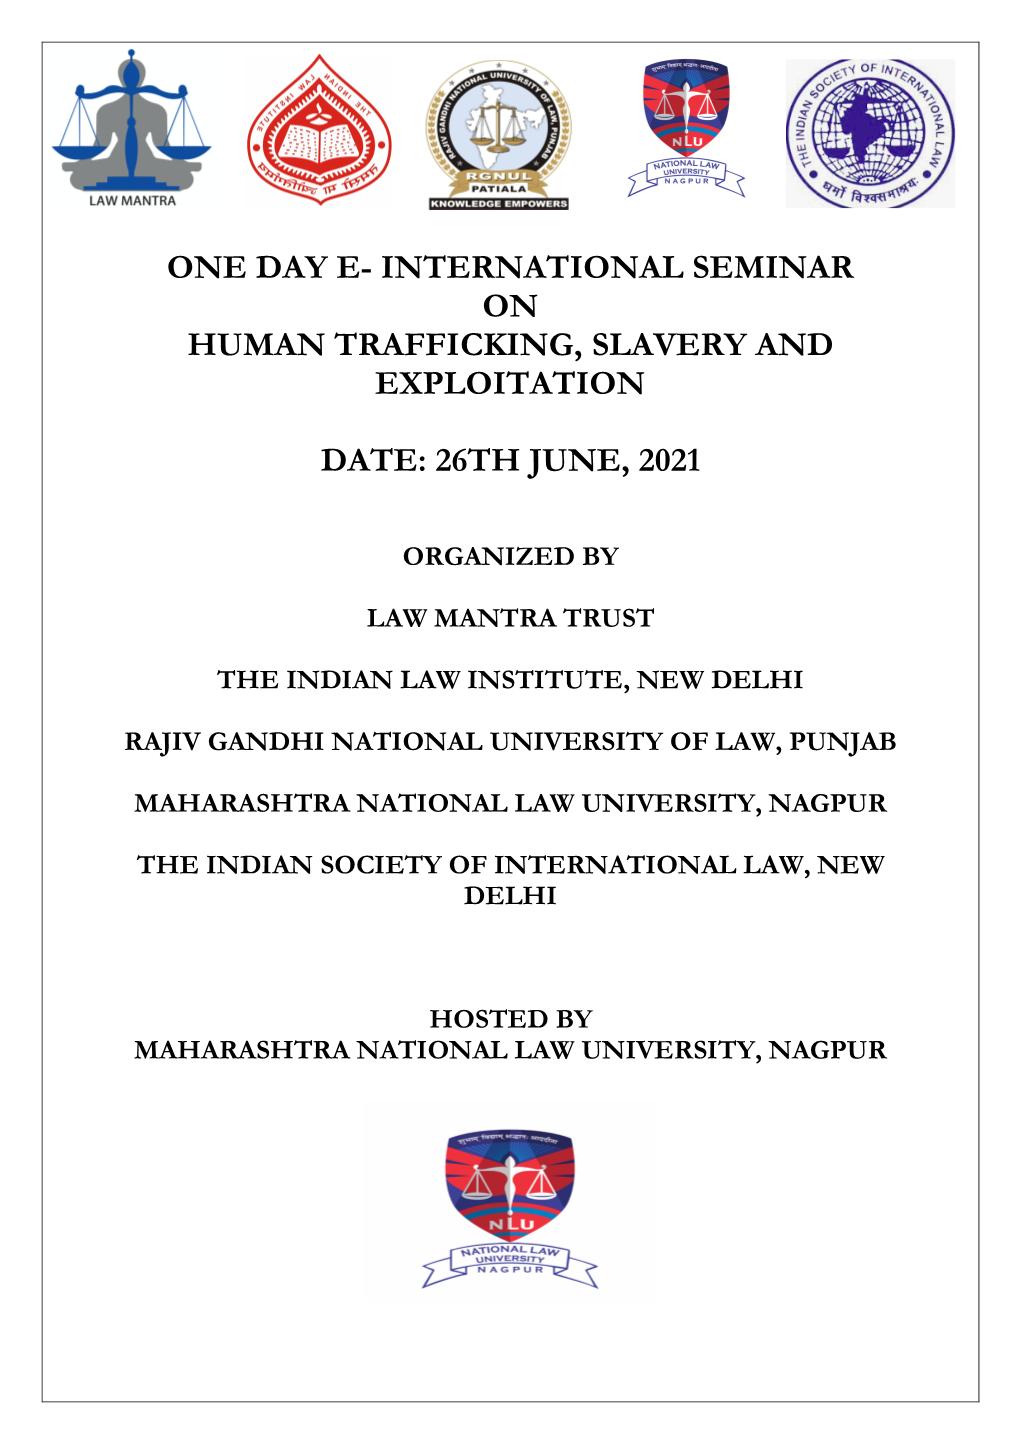 International Seminar on Human Trafficking, Slavery and Exploitation